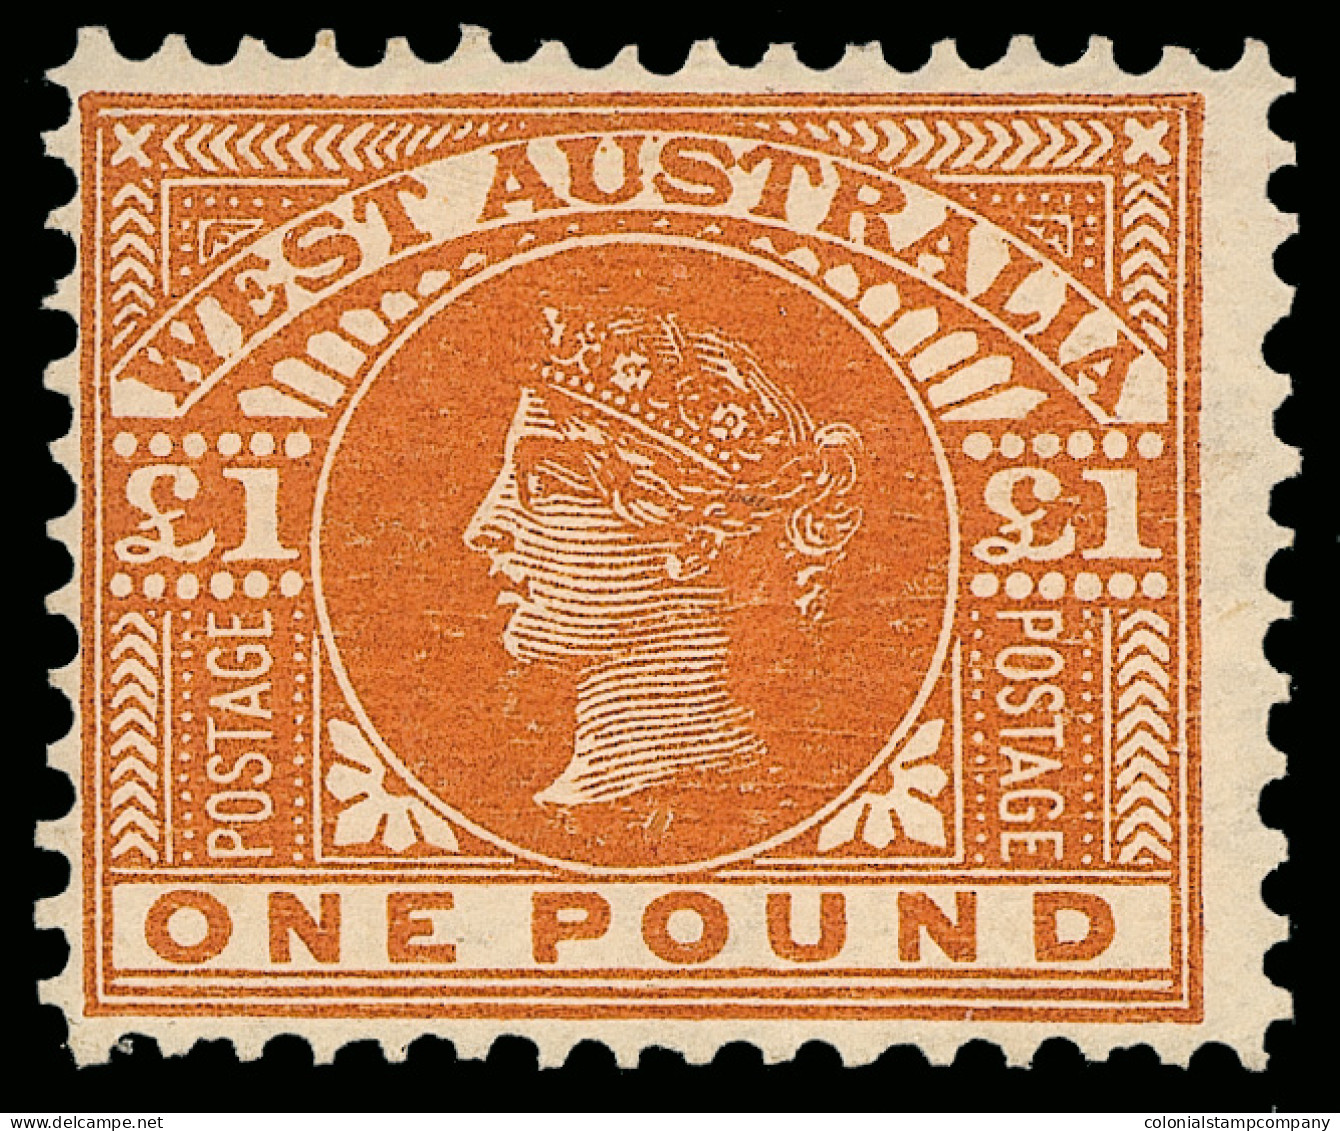 * Australia / Western Australia - Lot No. 192 - Neufs